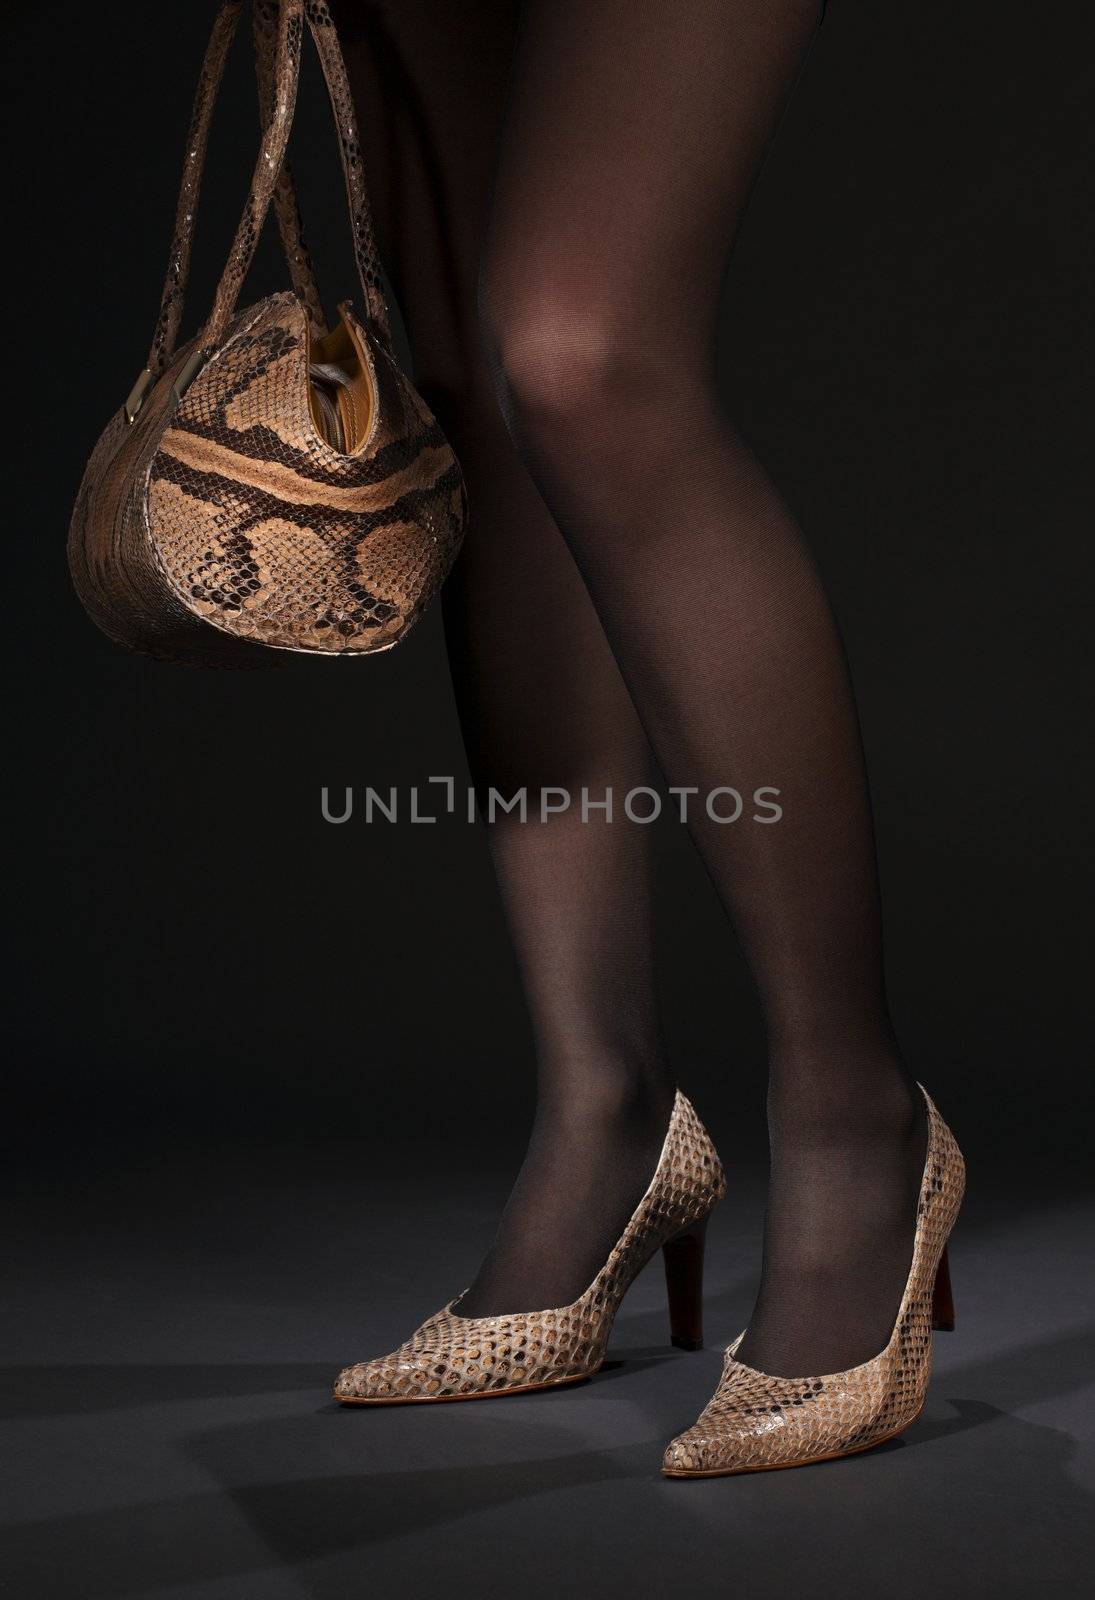 long legs in snakeskin shoes with handbag by dolgachov